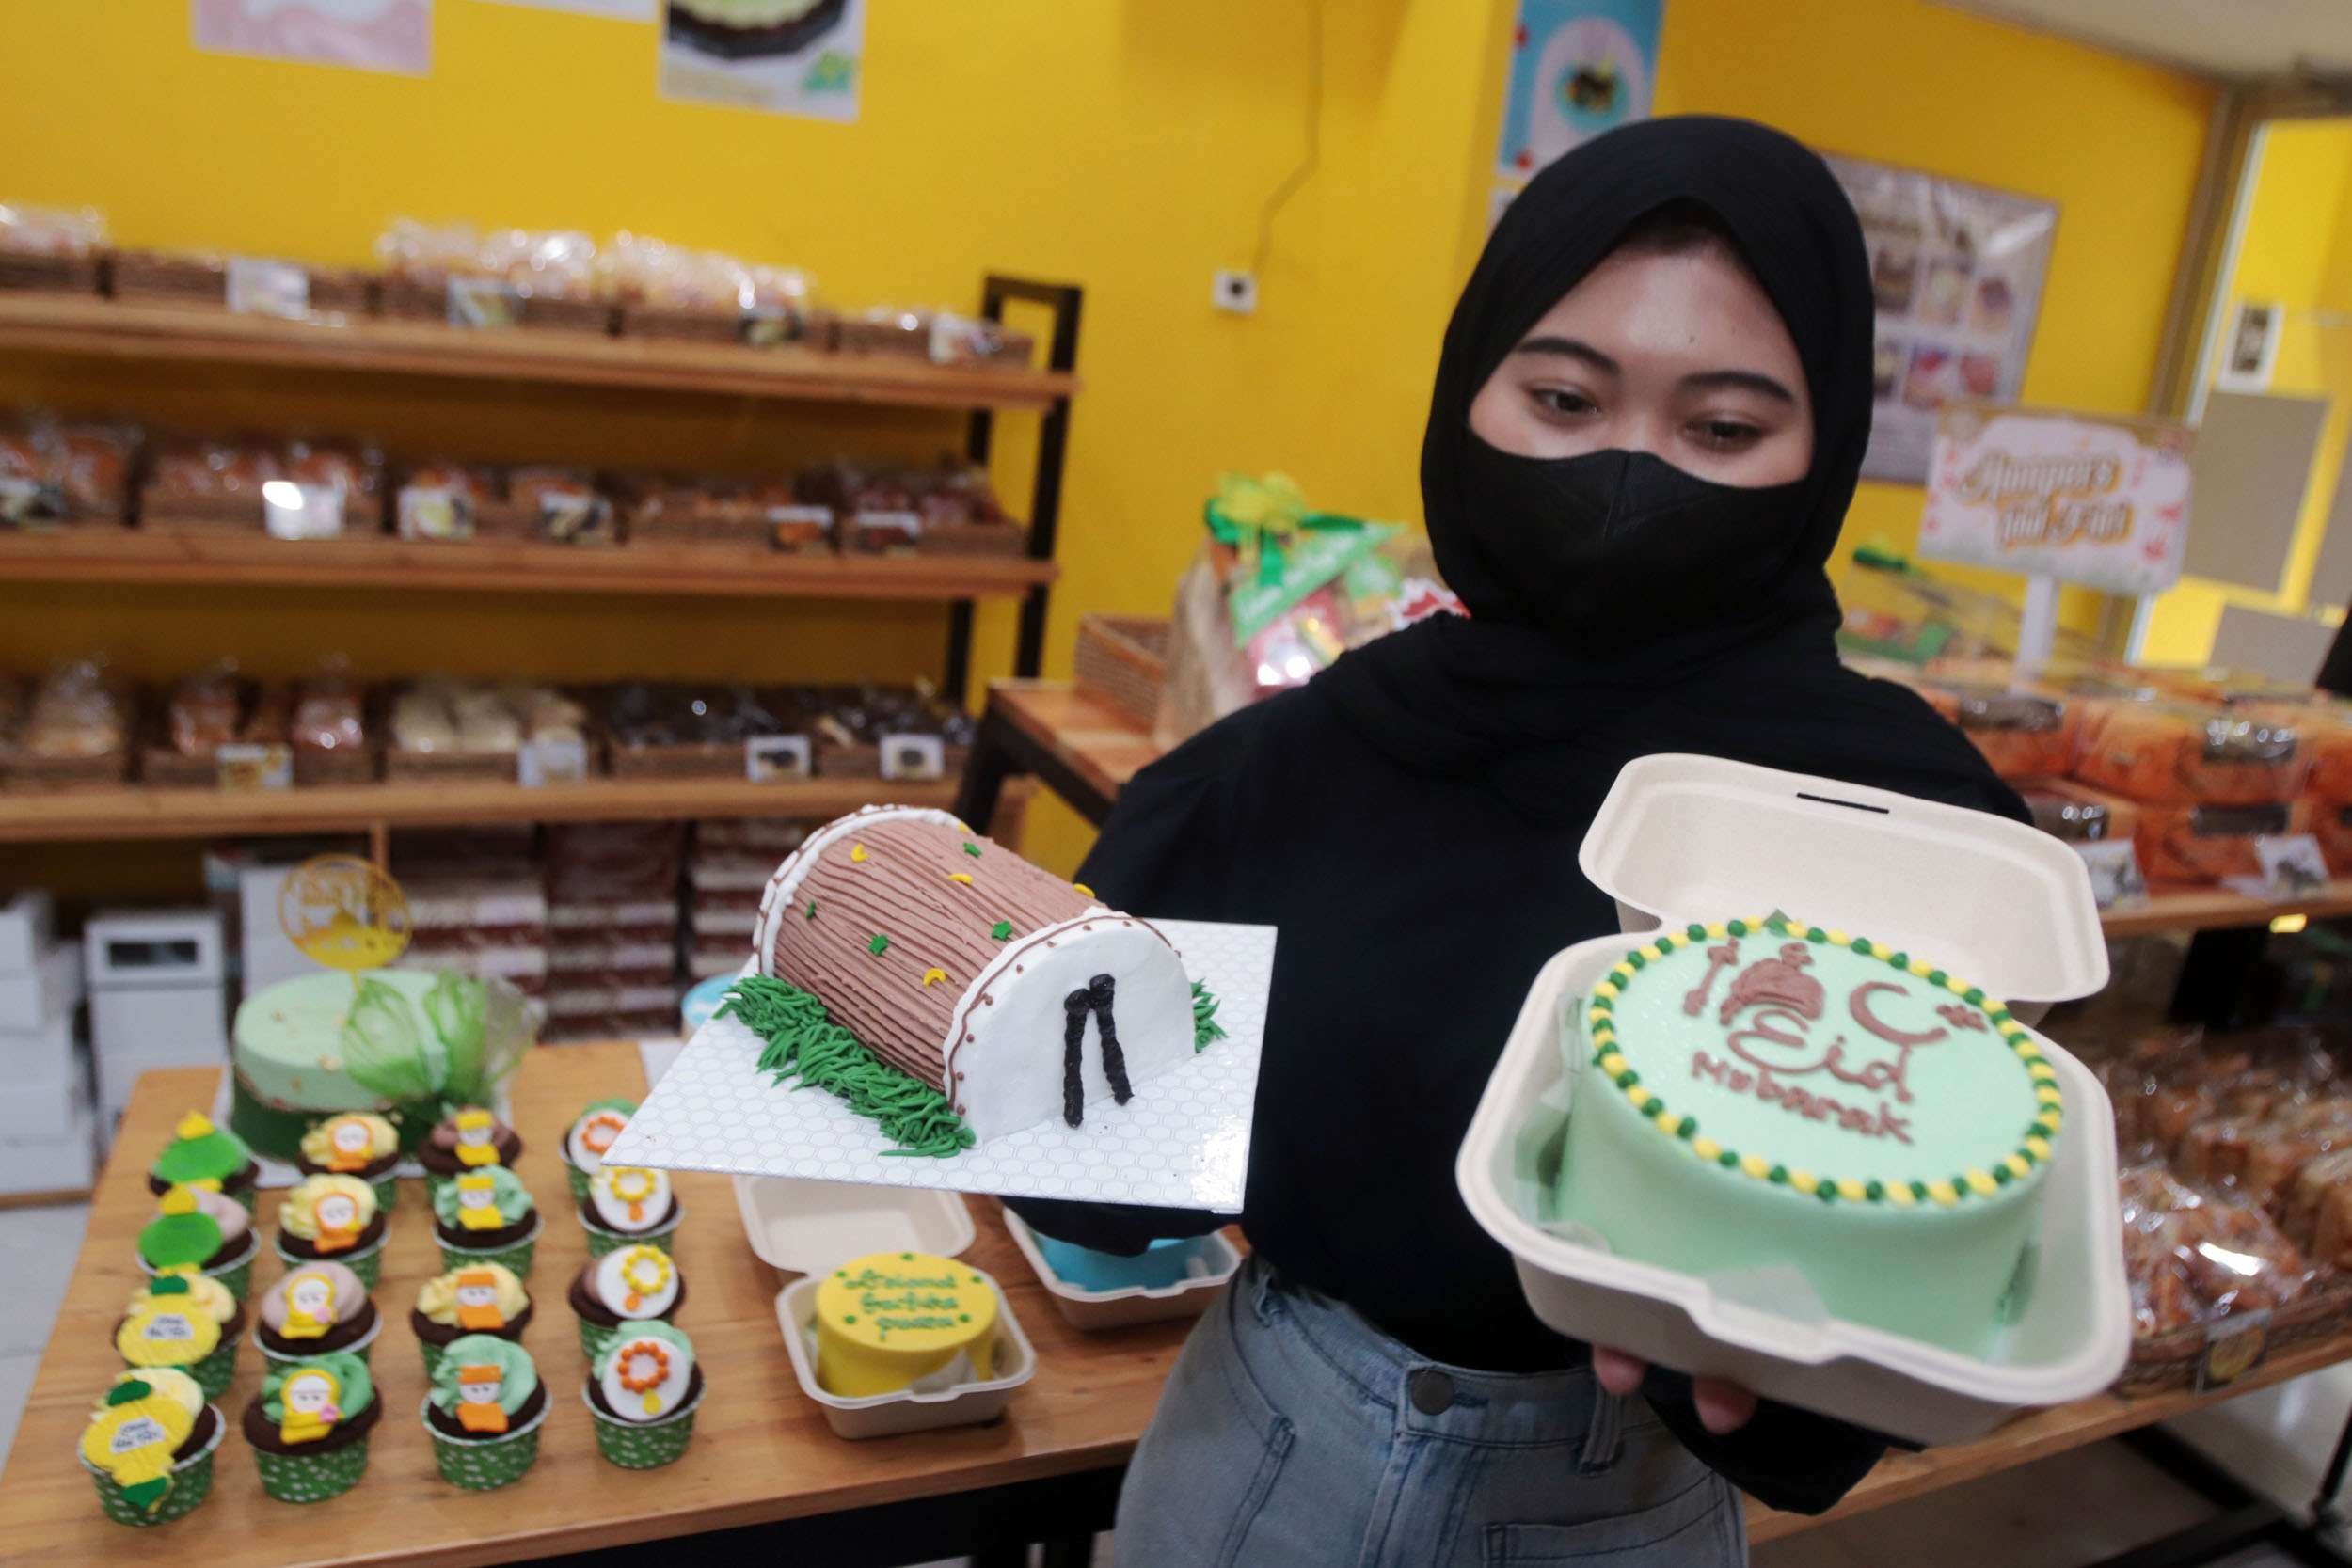 Kue bertema lebaran untuk pilihan hampers dan kue lebaran sedang tren di Surabaya. (Foto: Istimewa)